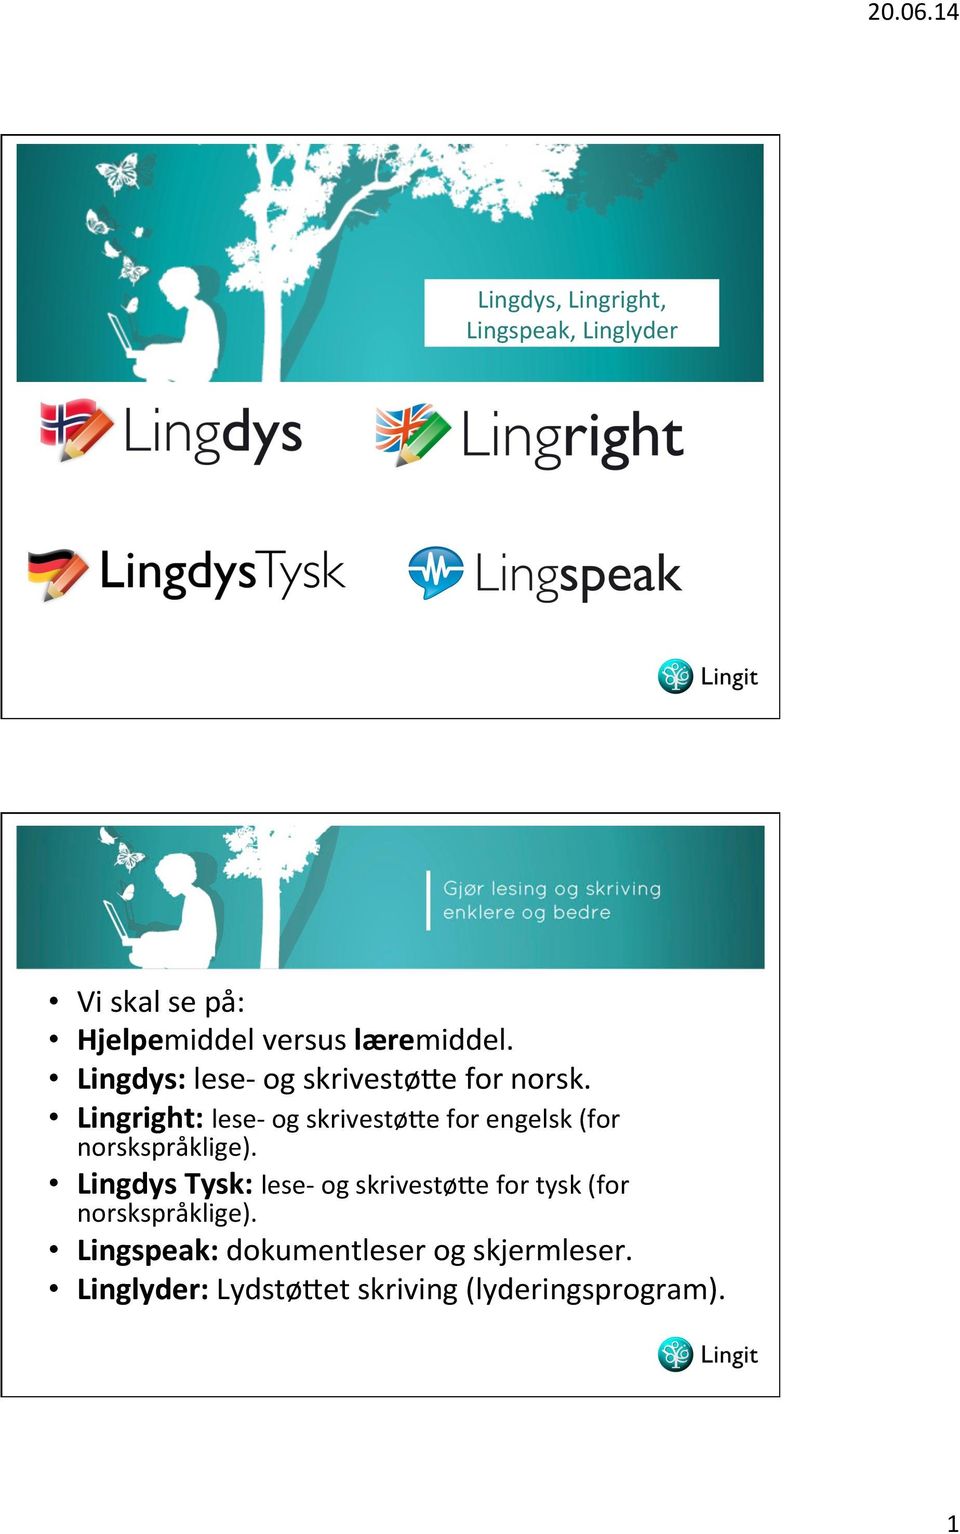 Lingdys: lese- og skrivestøae for norsk.